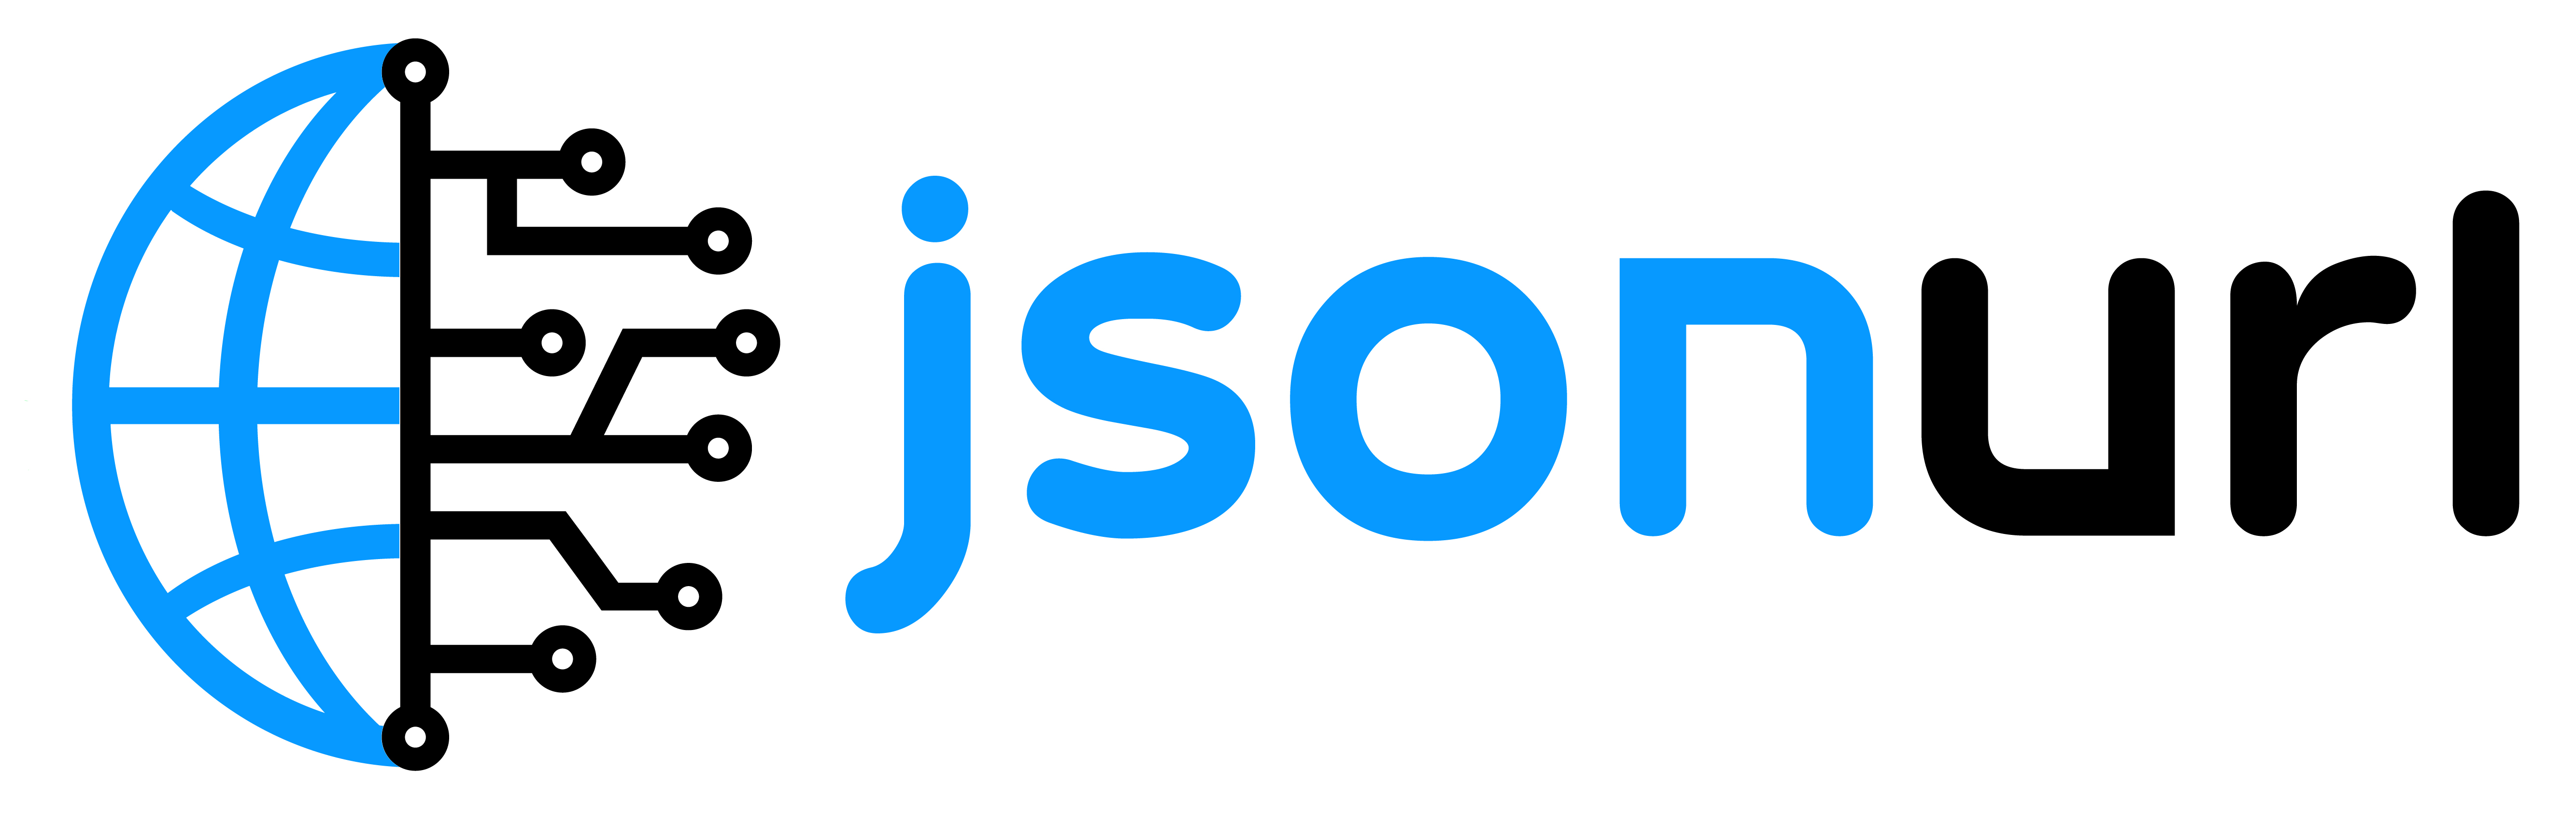 radio-online-json-url/Brazil.json at master · yunusdgntr/radio-online-json-url  · GitHub